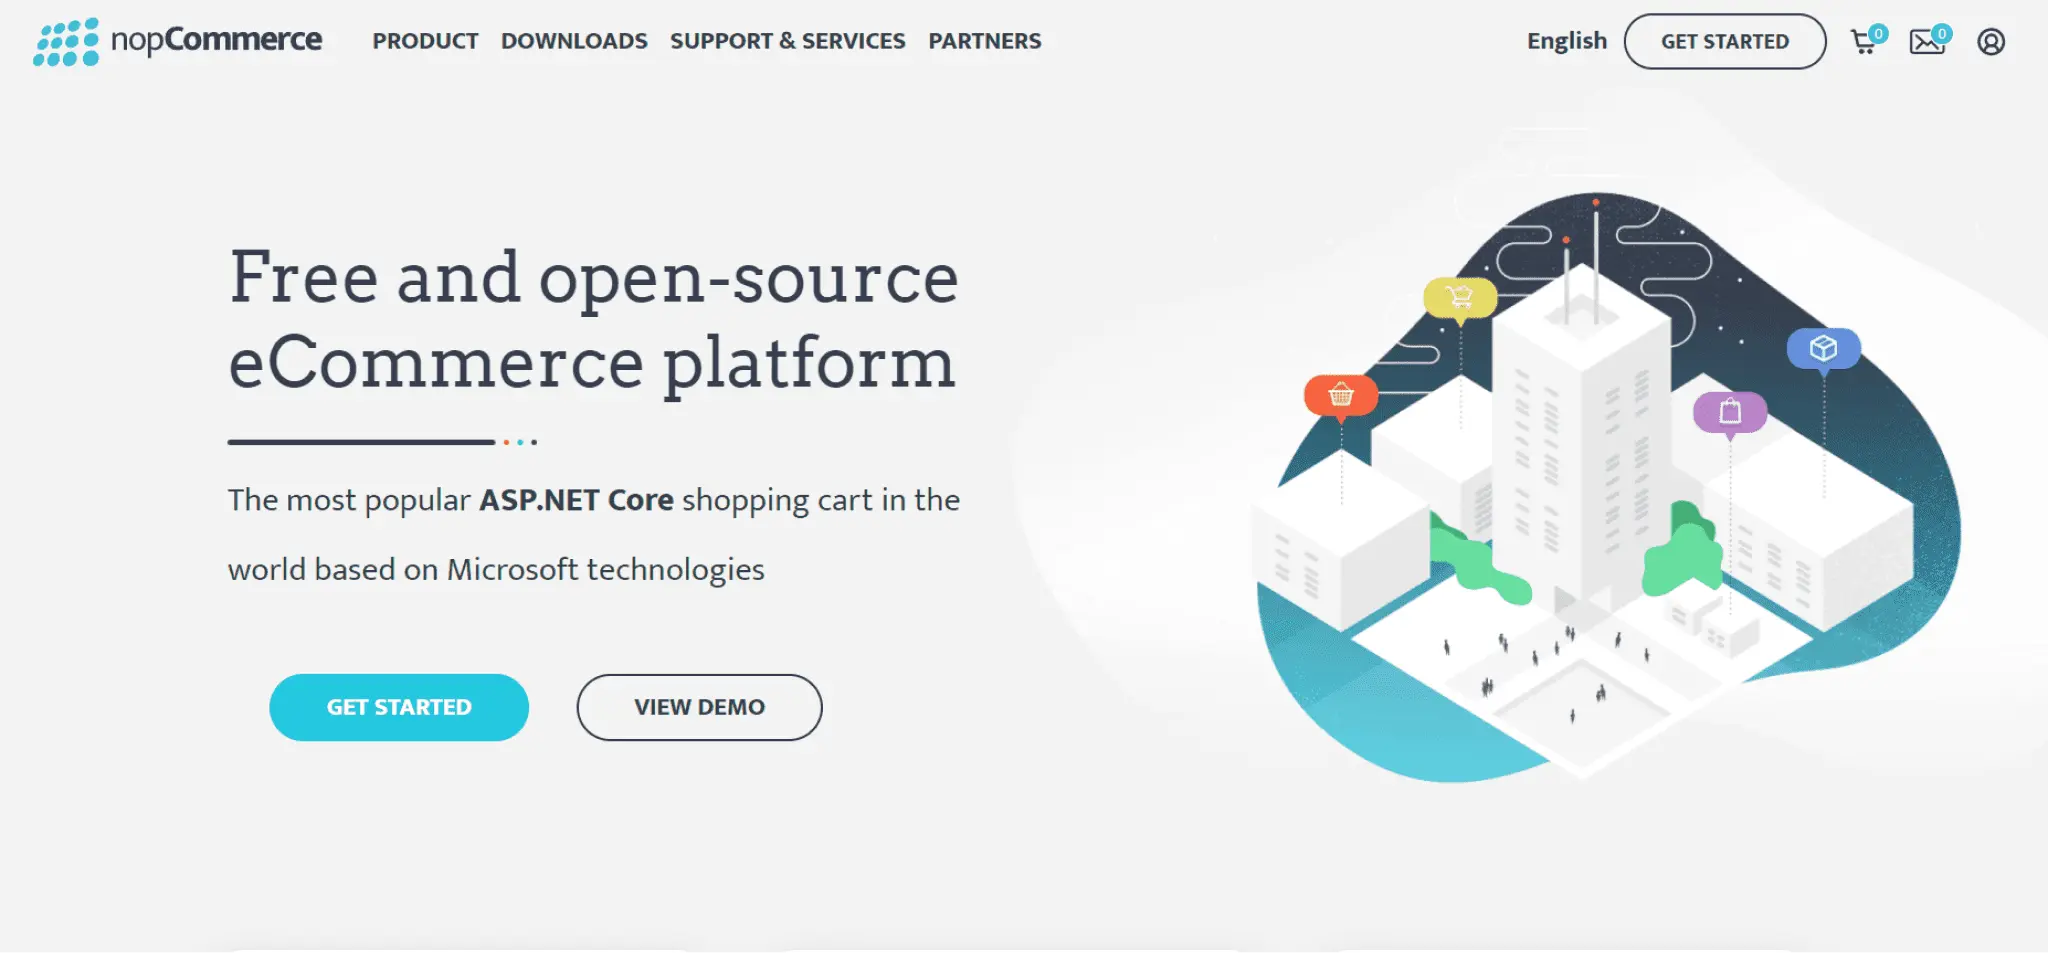 nopCommerce free ecommerce platform to download